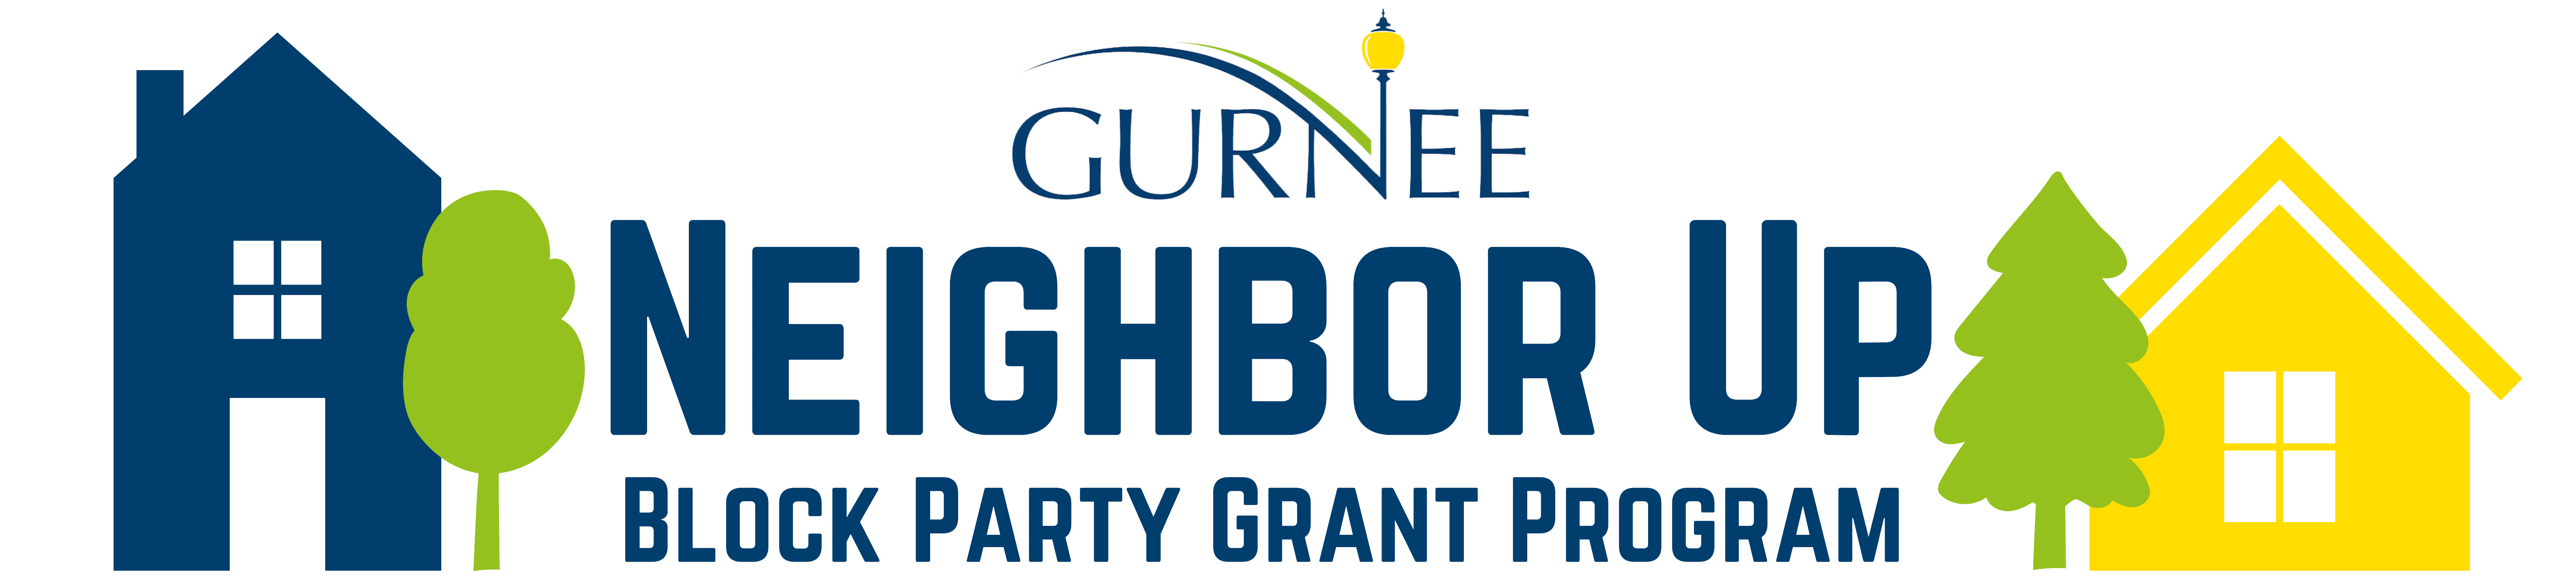 Neighbor Up Block Party Grant Logo